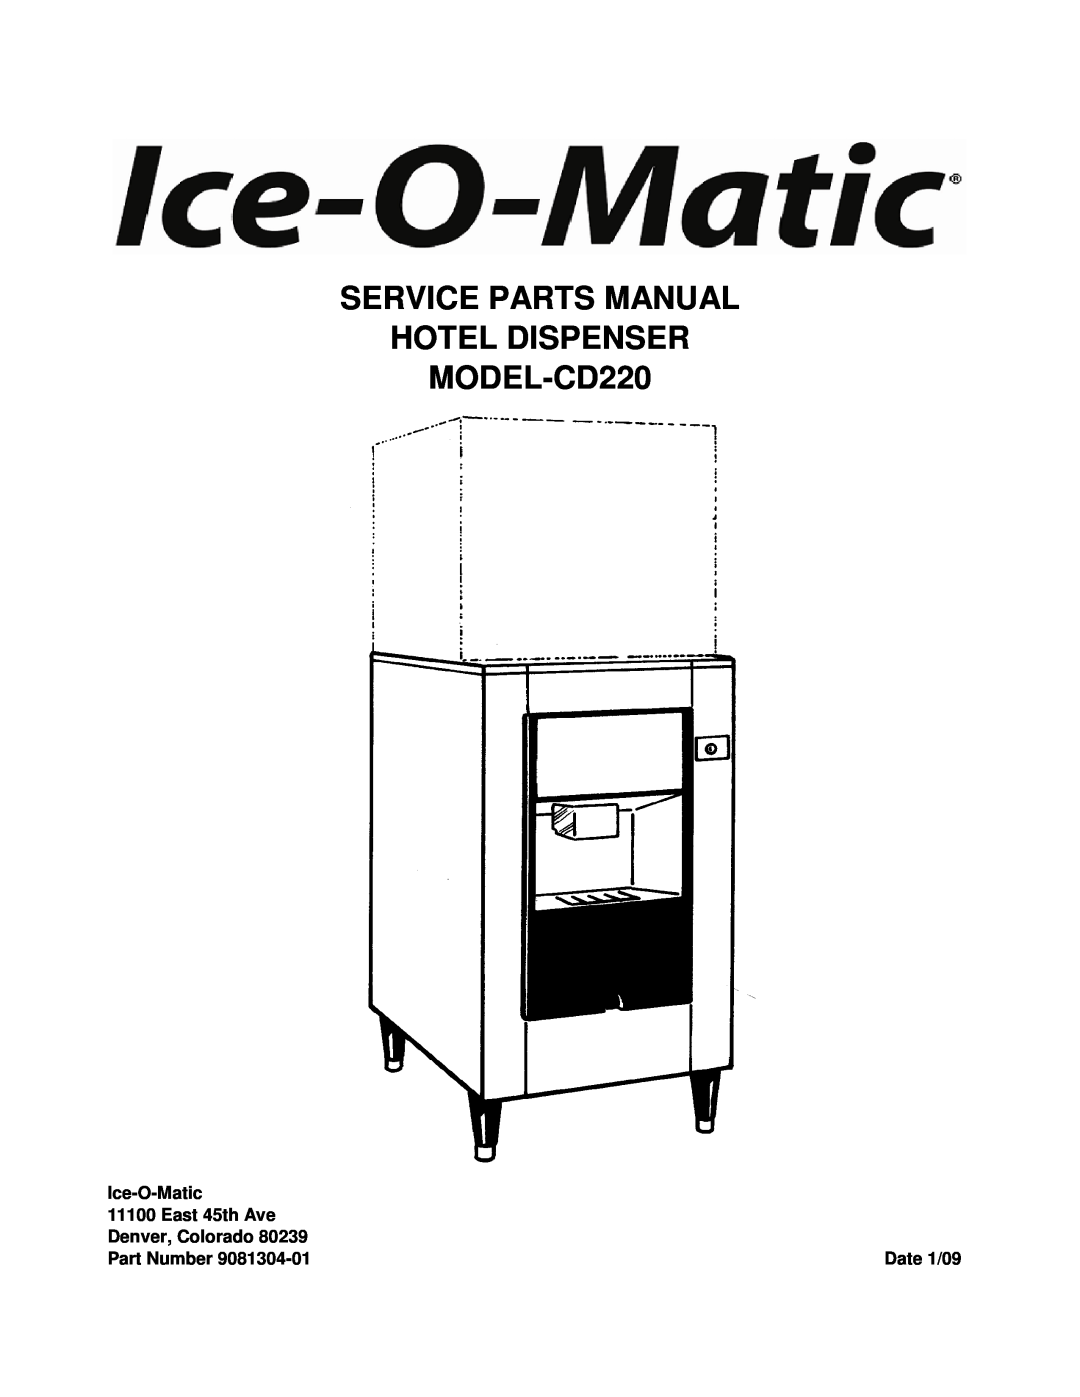 Ice-O-Matic manual SERVICE PARTS MANUAL HOTEL DISPENSER MODEL-CD220, Ice-O-Matic, East 45th Ave, Denver, Colorado 